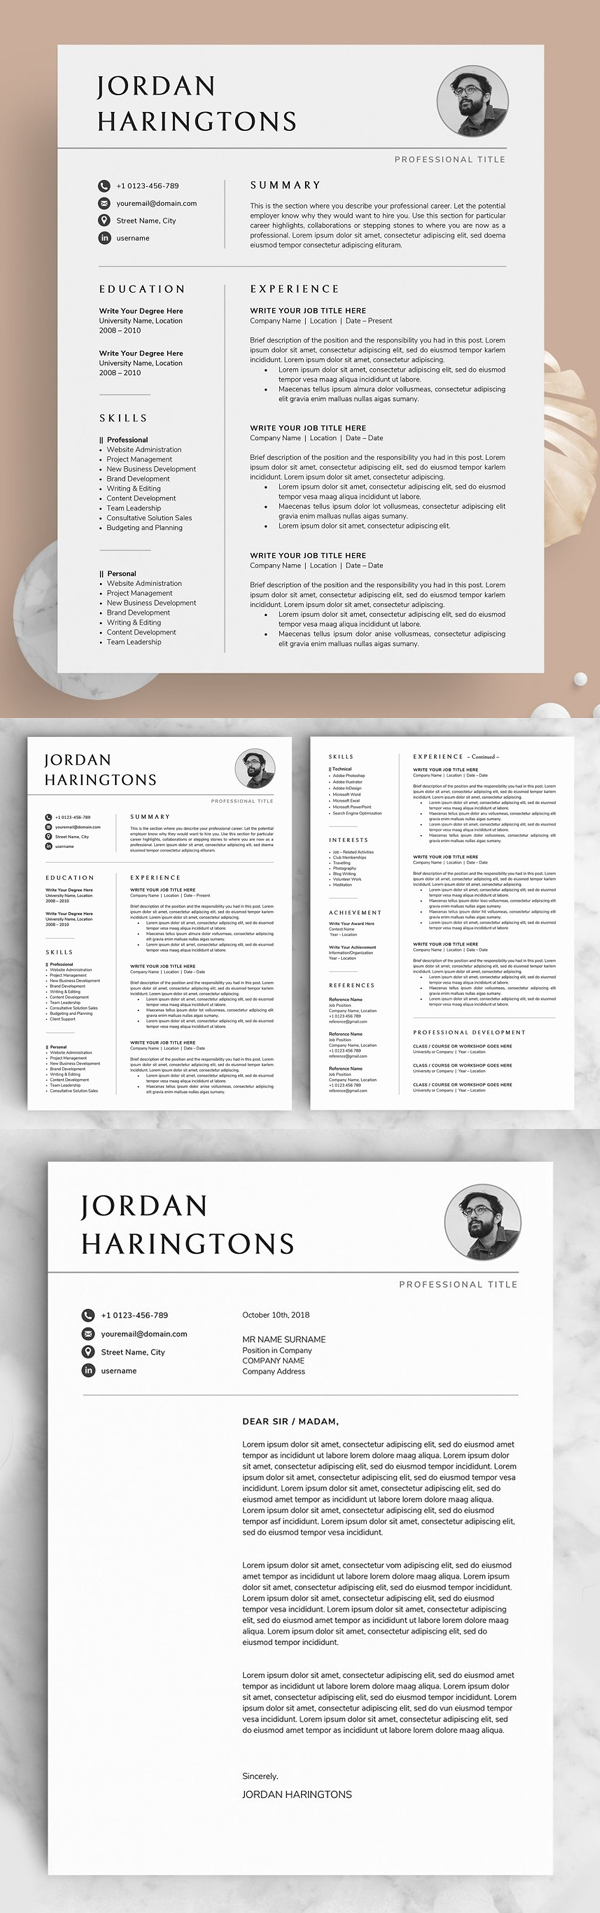 Resume/CV - The Jordan